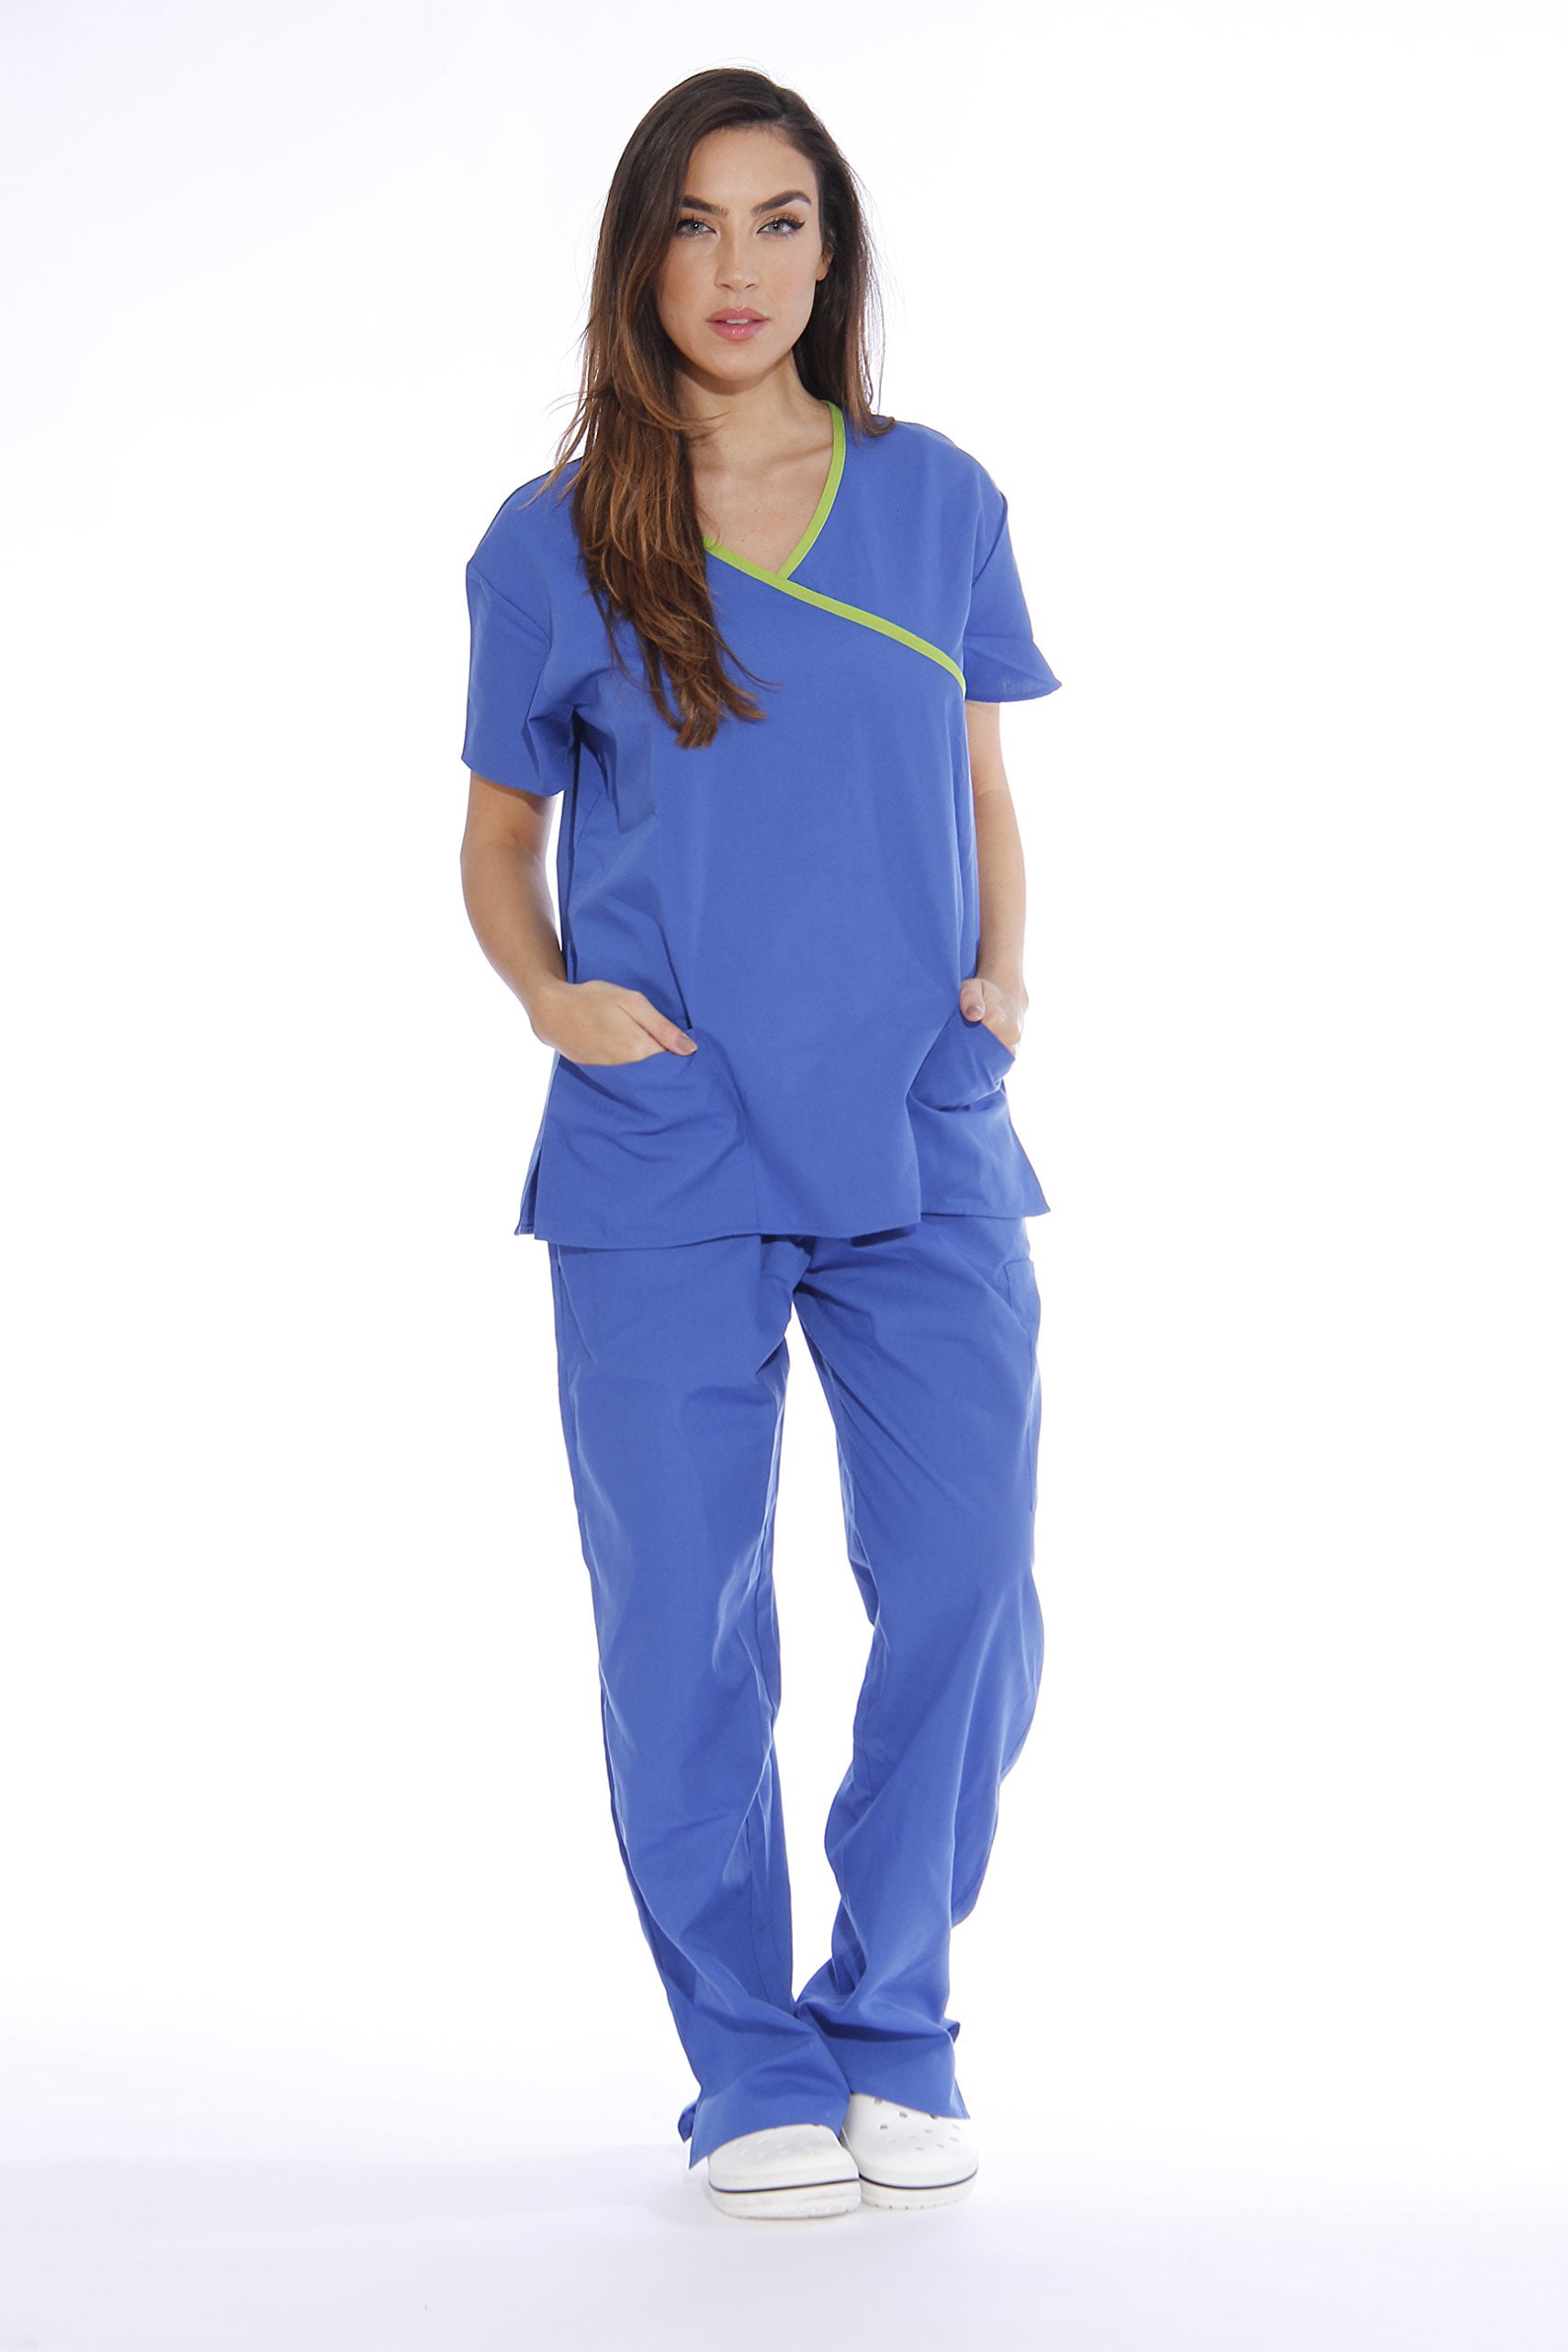 11149W Just Love Women's Scrub Sets / Medical Scrubs / Nursing Scrubs - L  (Small, Royal Blue With Lime Trim)